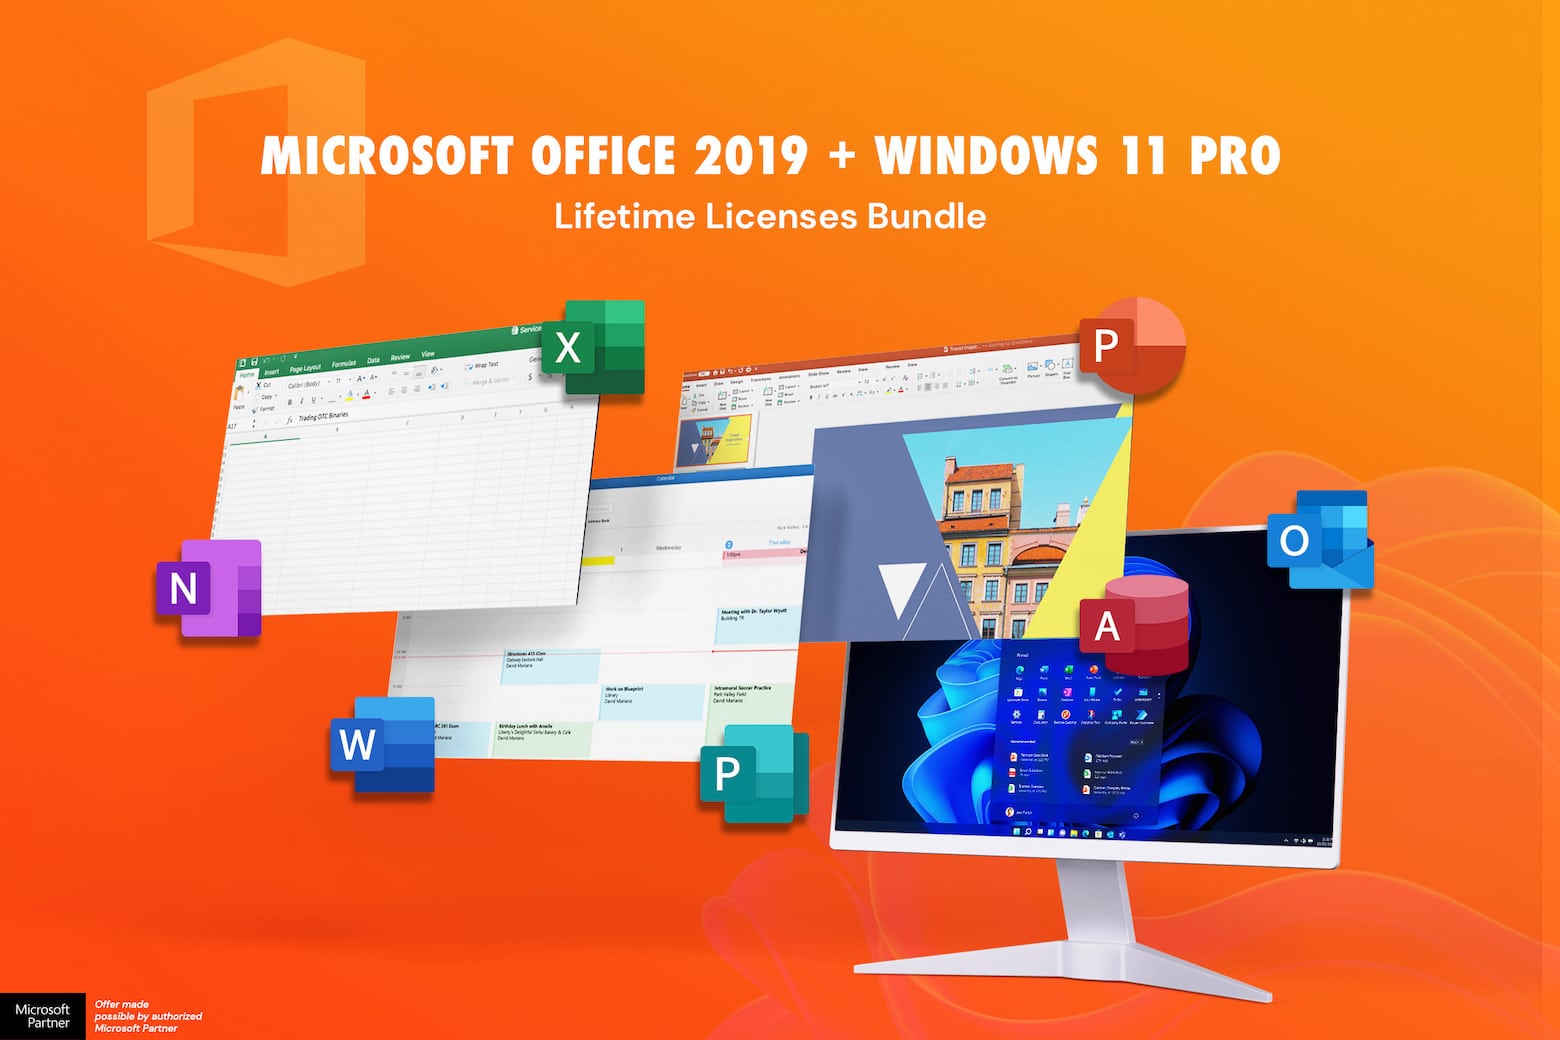 $50 bundle packs Microsoft Office Pro Plus 2019, Windows 11 Pro